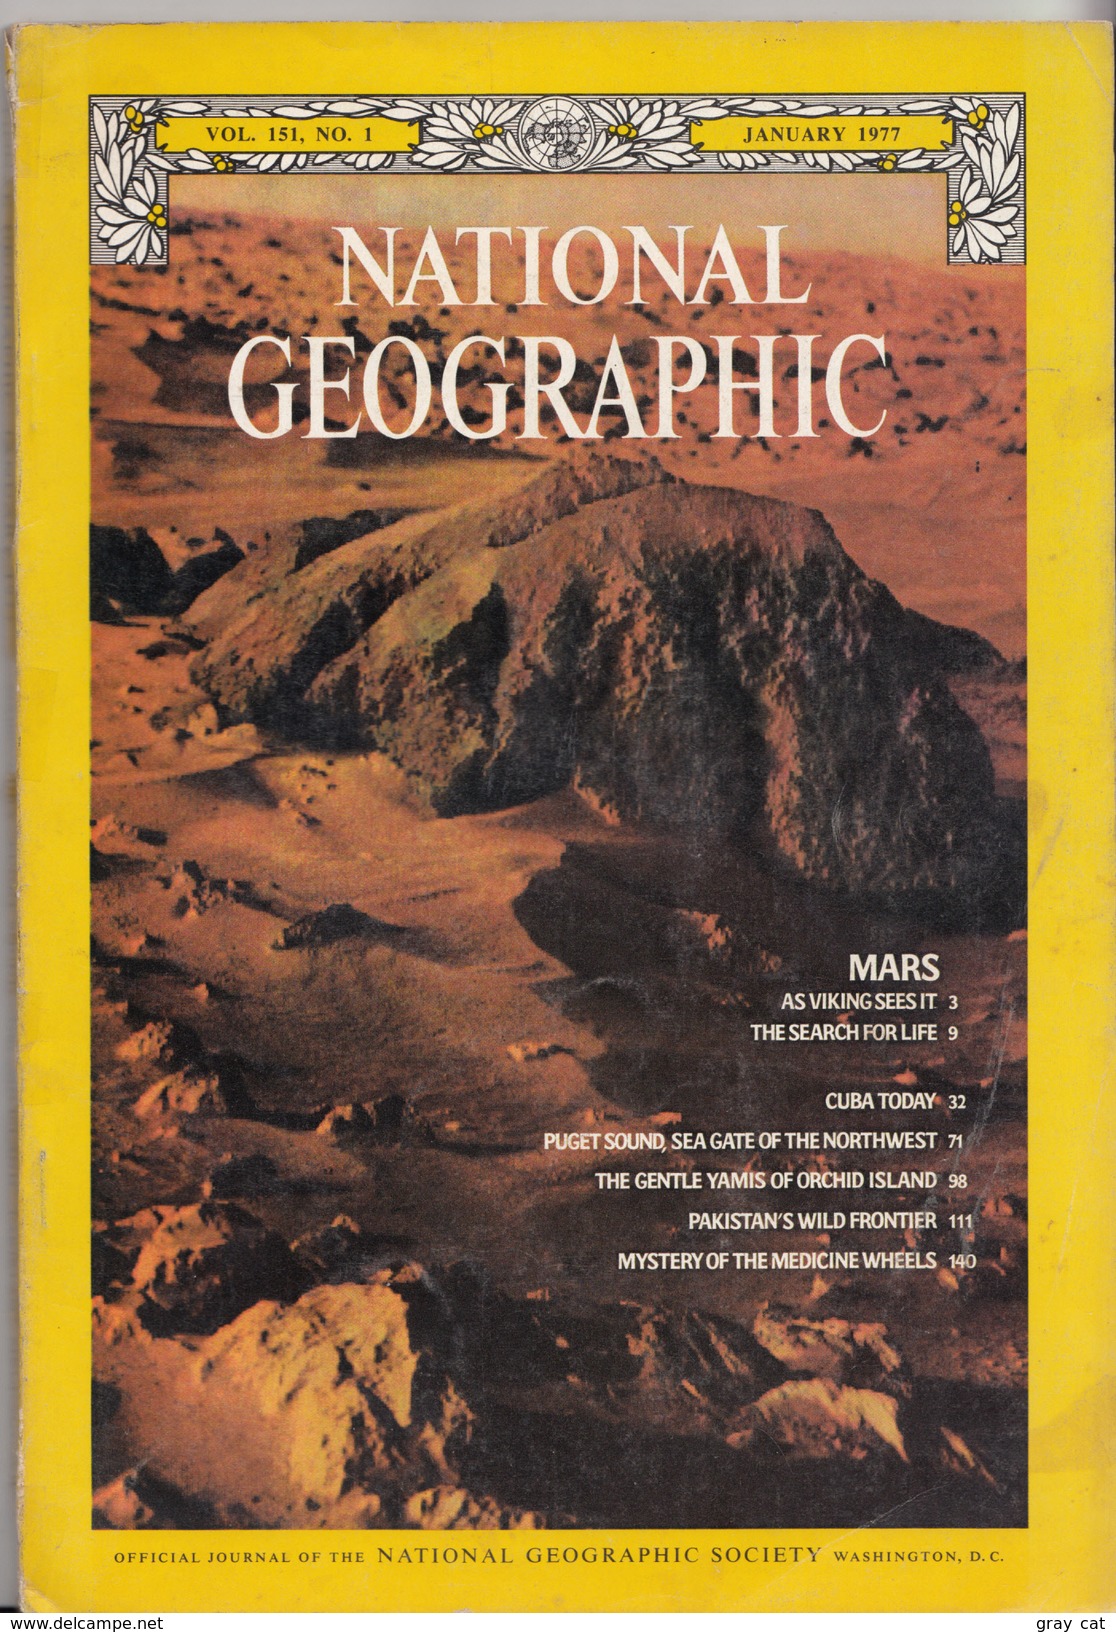 National Geographic Magazine Vol. 151, No. 1, January 1977 - Reisen